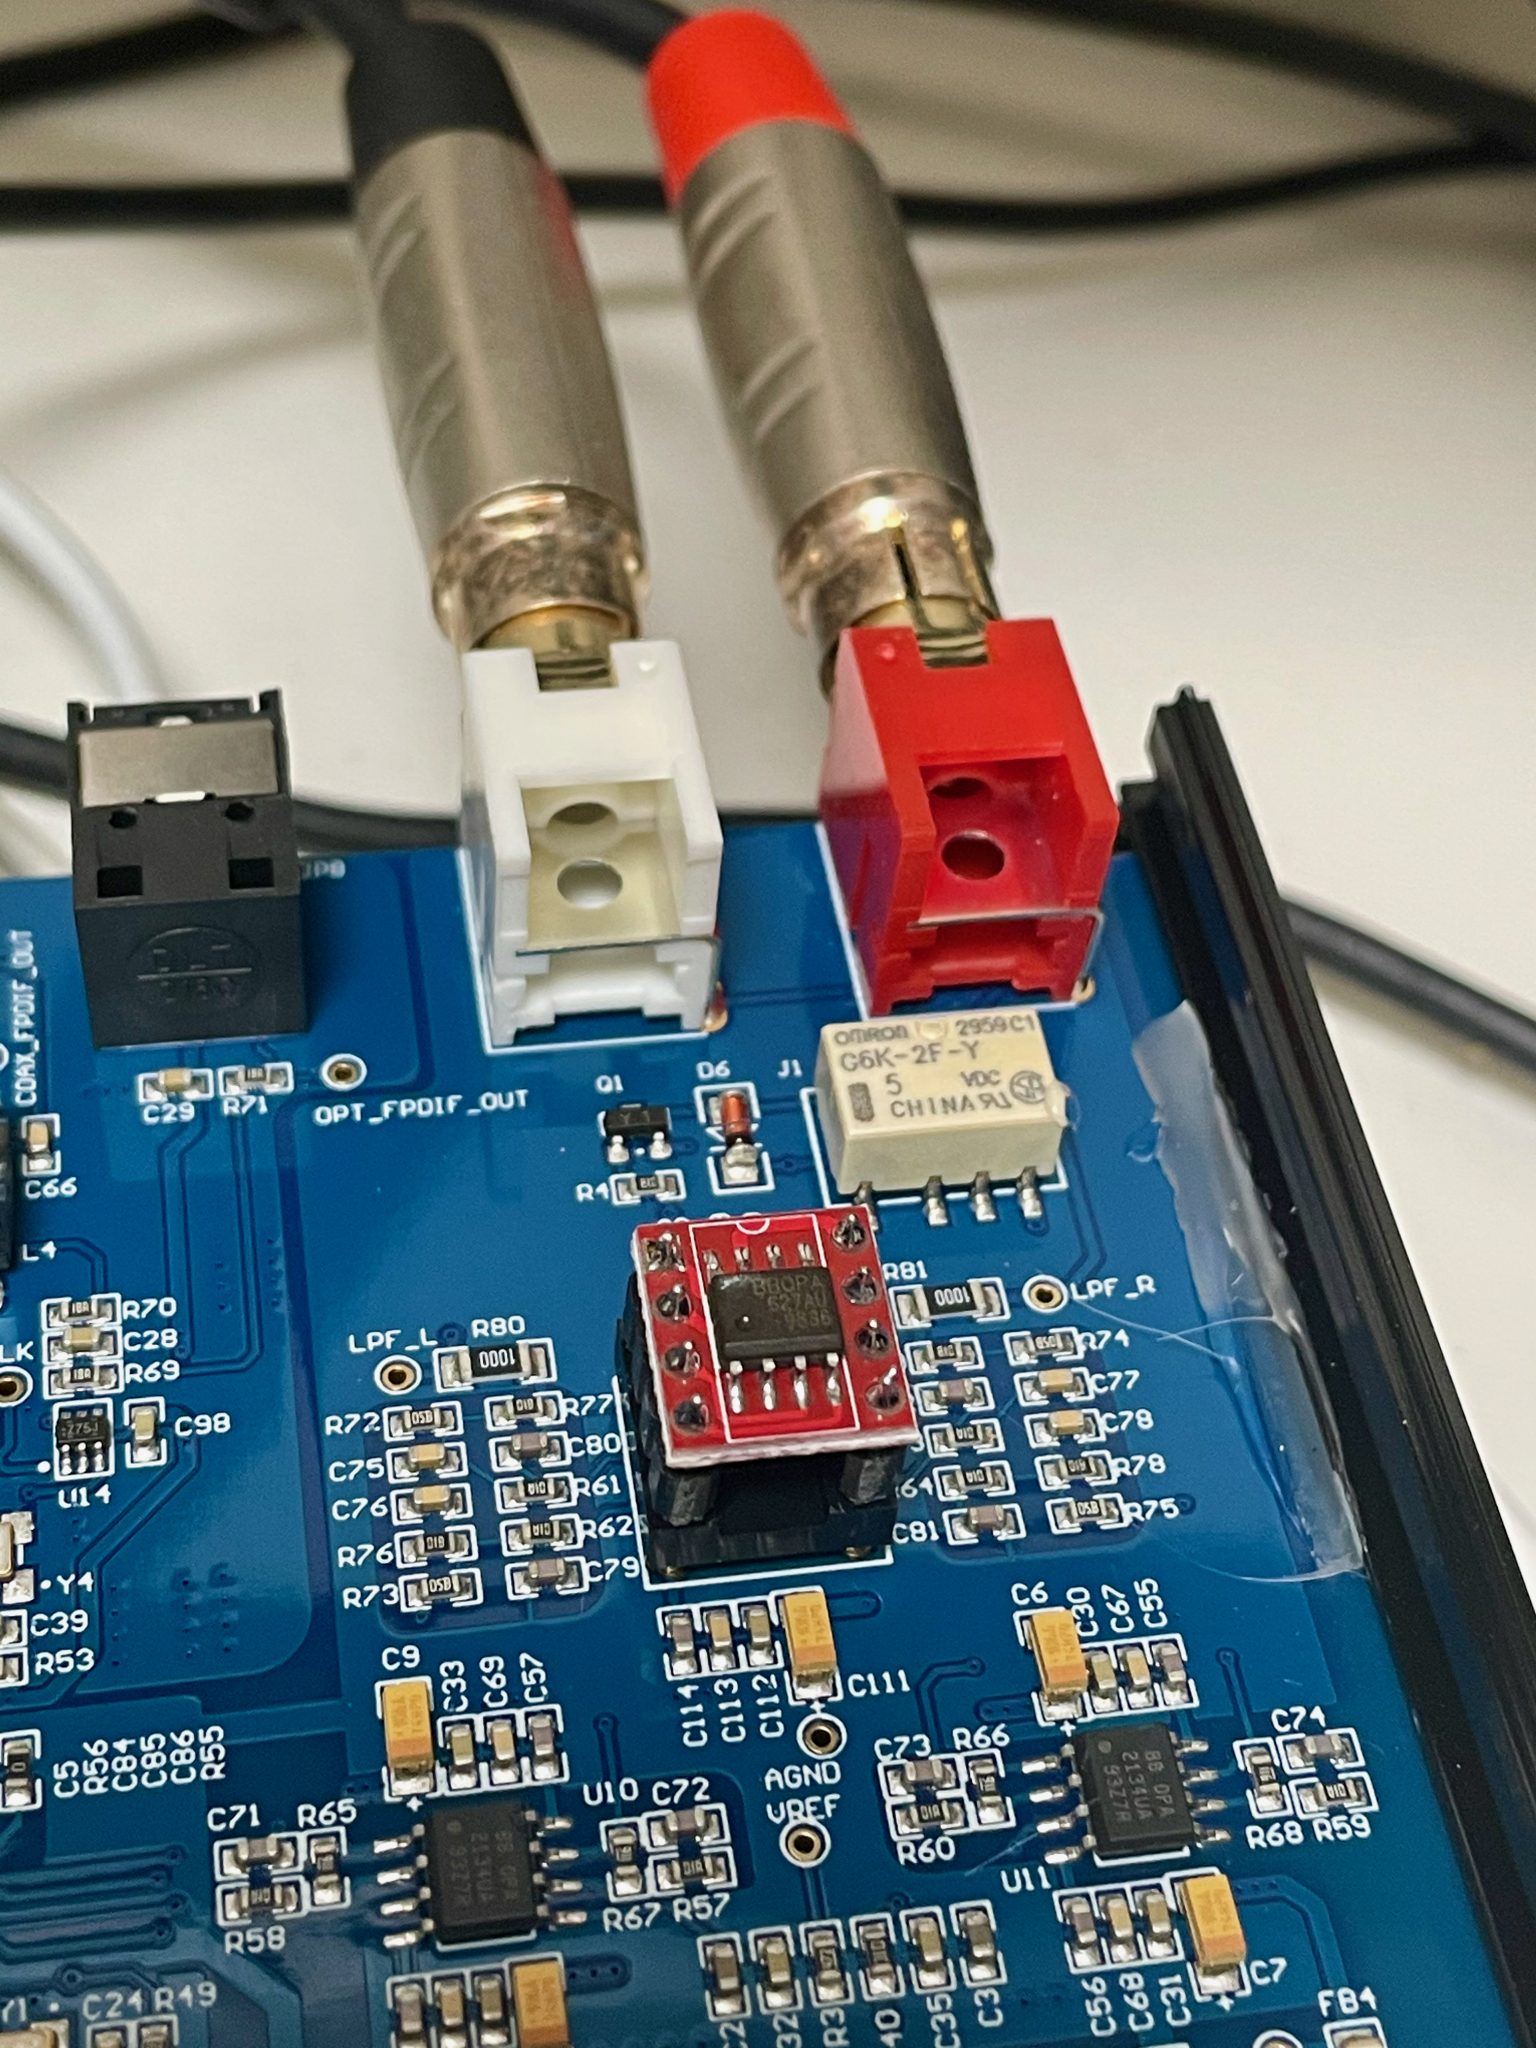 TOPPING D10 USB DACのチップをOPA627AUに交換 | Matsubo Tech Blog